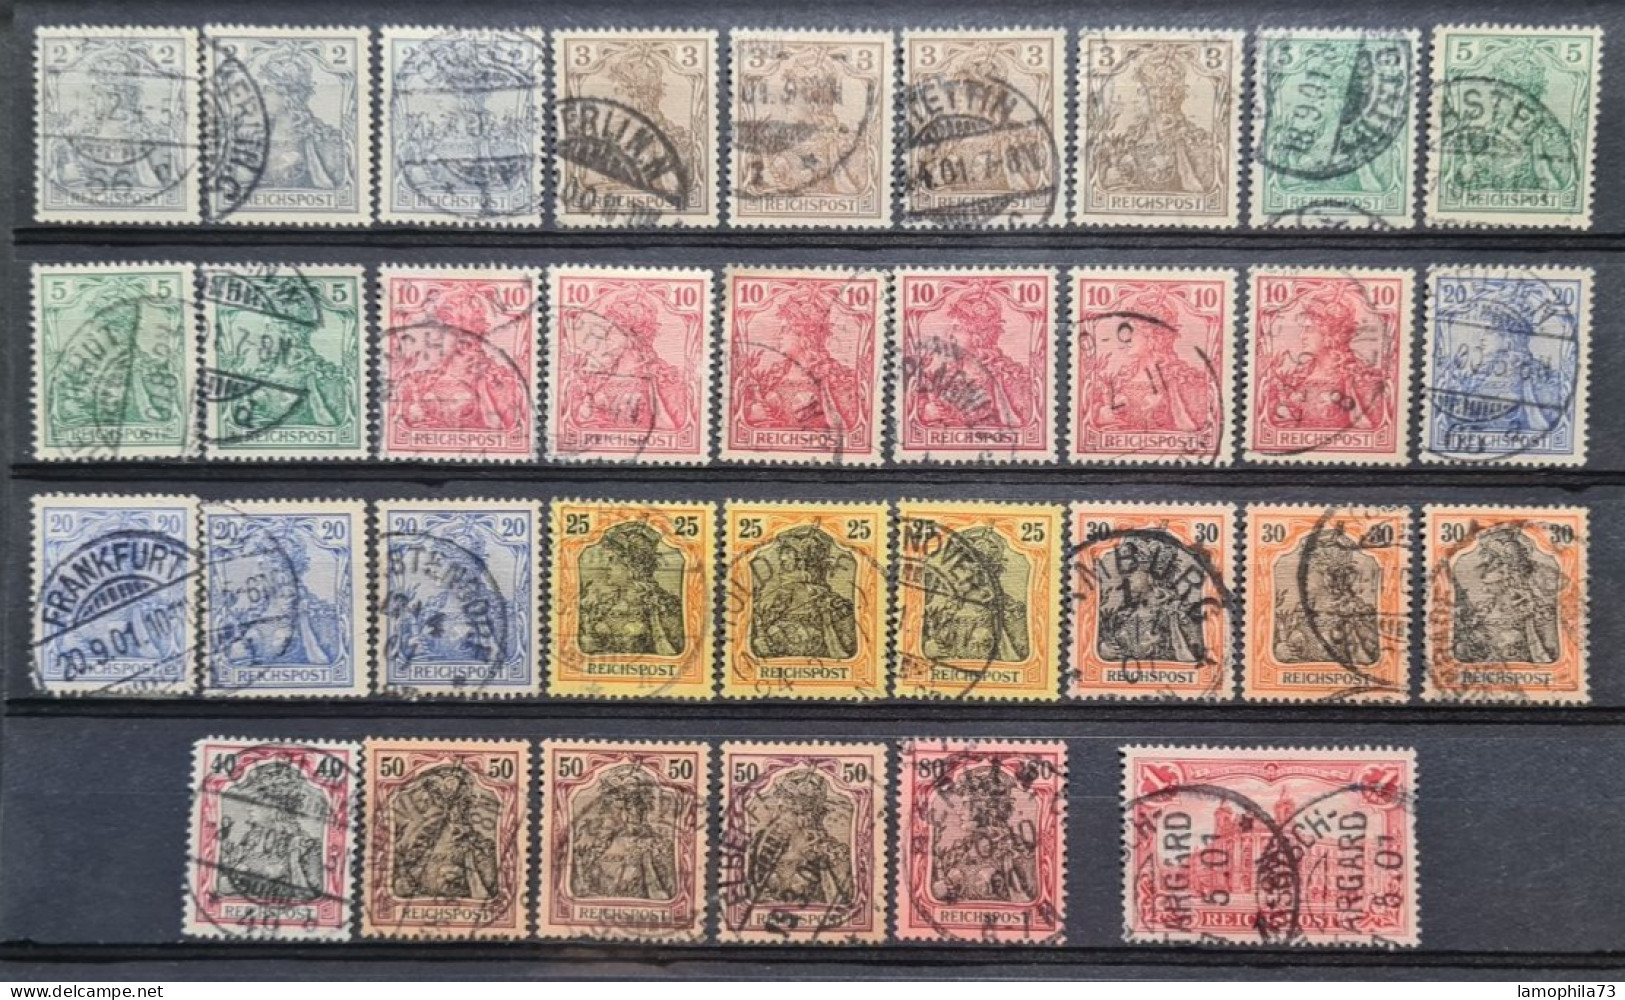 Allemagne Reichpost - Stamp(s) (O) - TB - 1 Scan(s) Réf-2321 - Gebraucht